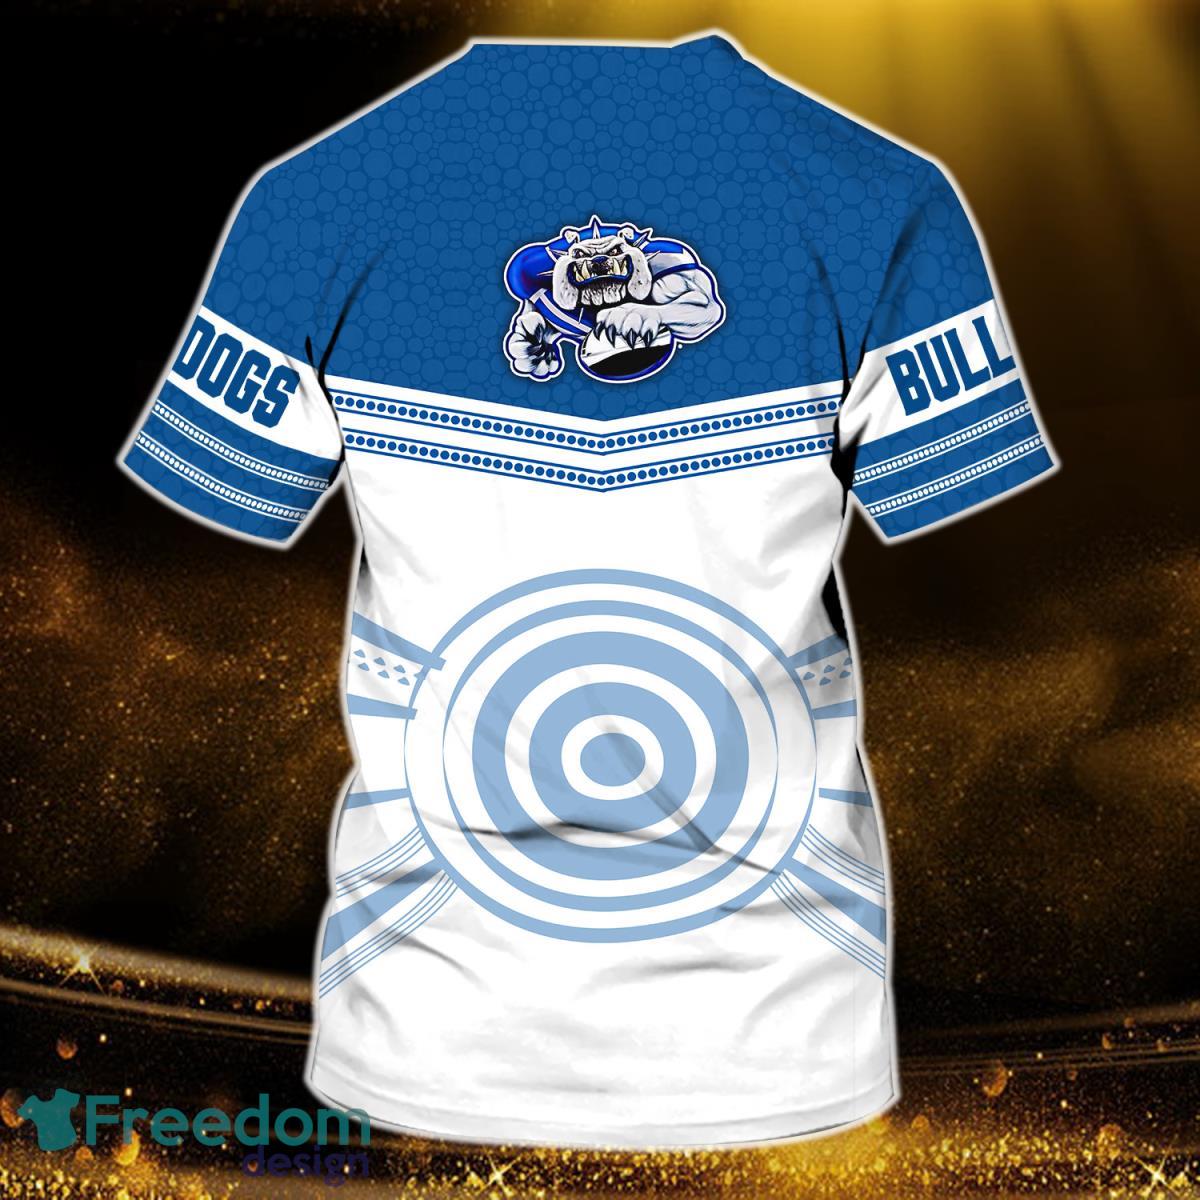 Canterbury-Bankstown Bulldogs NRL Personalized Name 3D Tshirt Product Photo 2